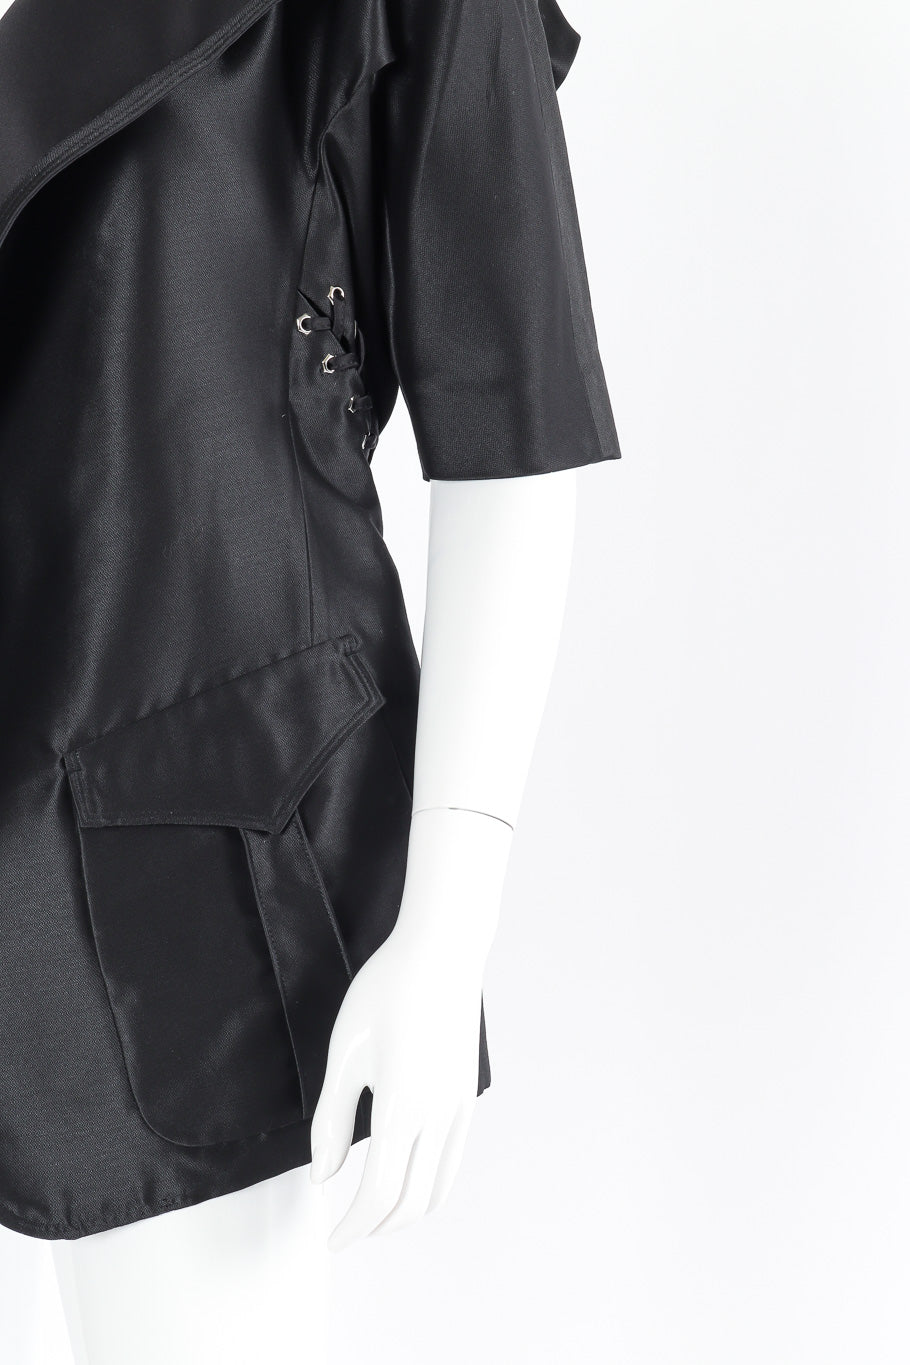 Grommet jacket by Yves Saint Laurent mannequin side and sleeve  @recessla